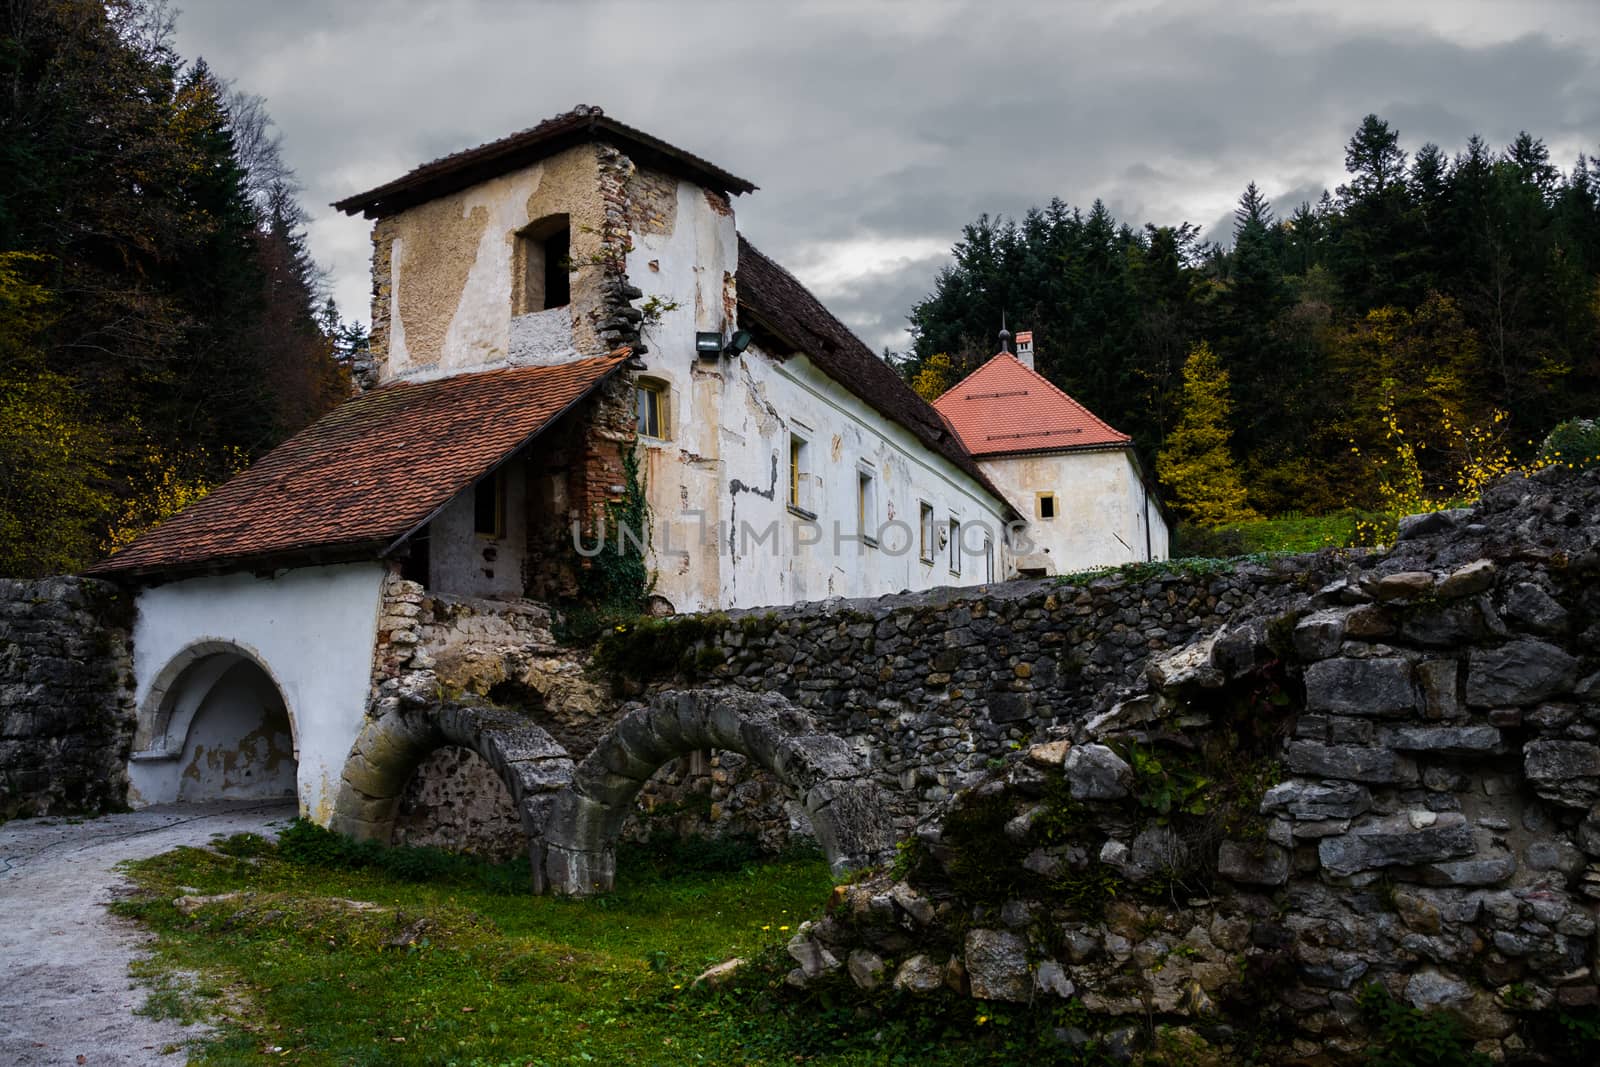 Zicka kartuzija (zice charterhouse) Carthusian monastery .Slovenia